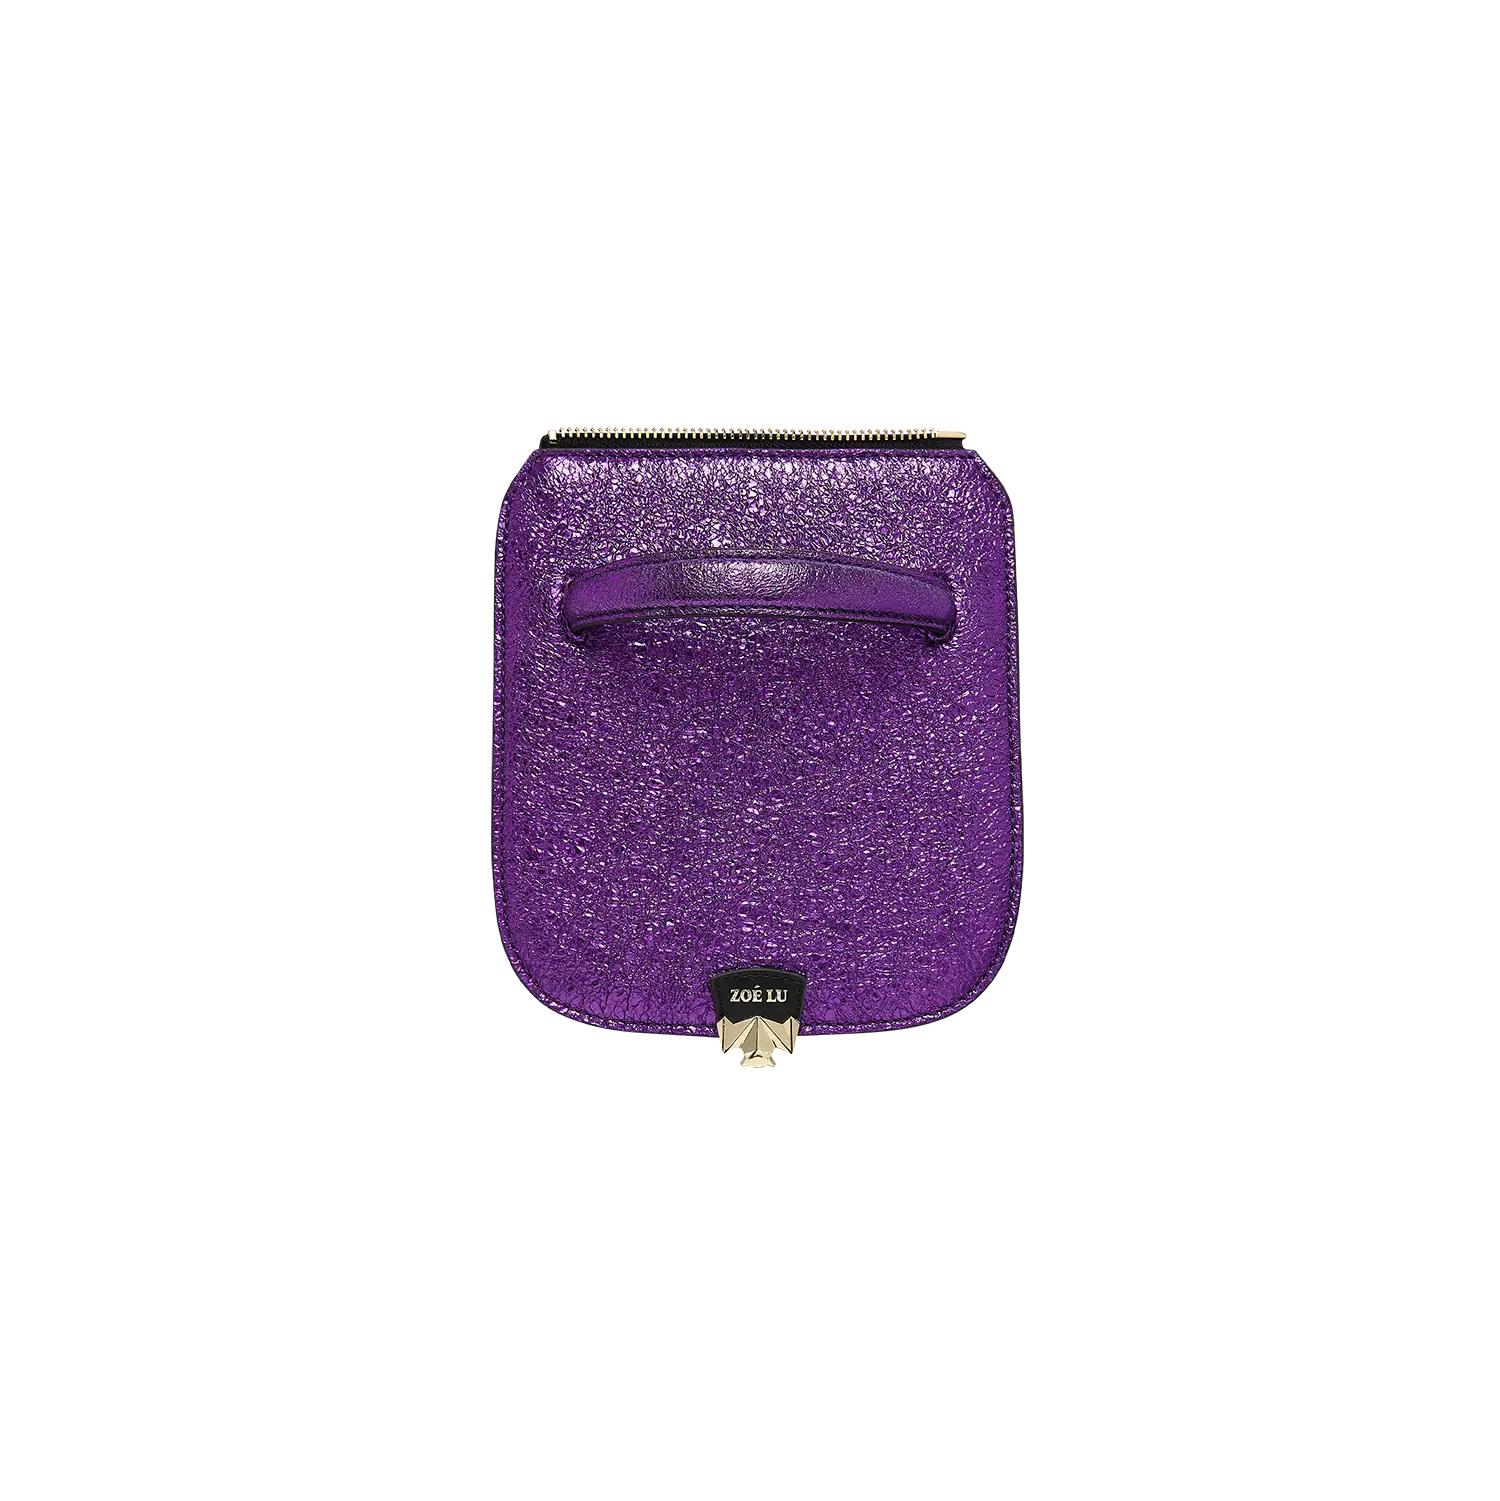 Wechselklappe - Mini Berry Glam - lila-metallic